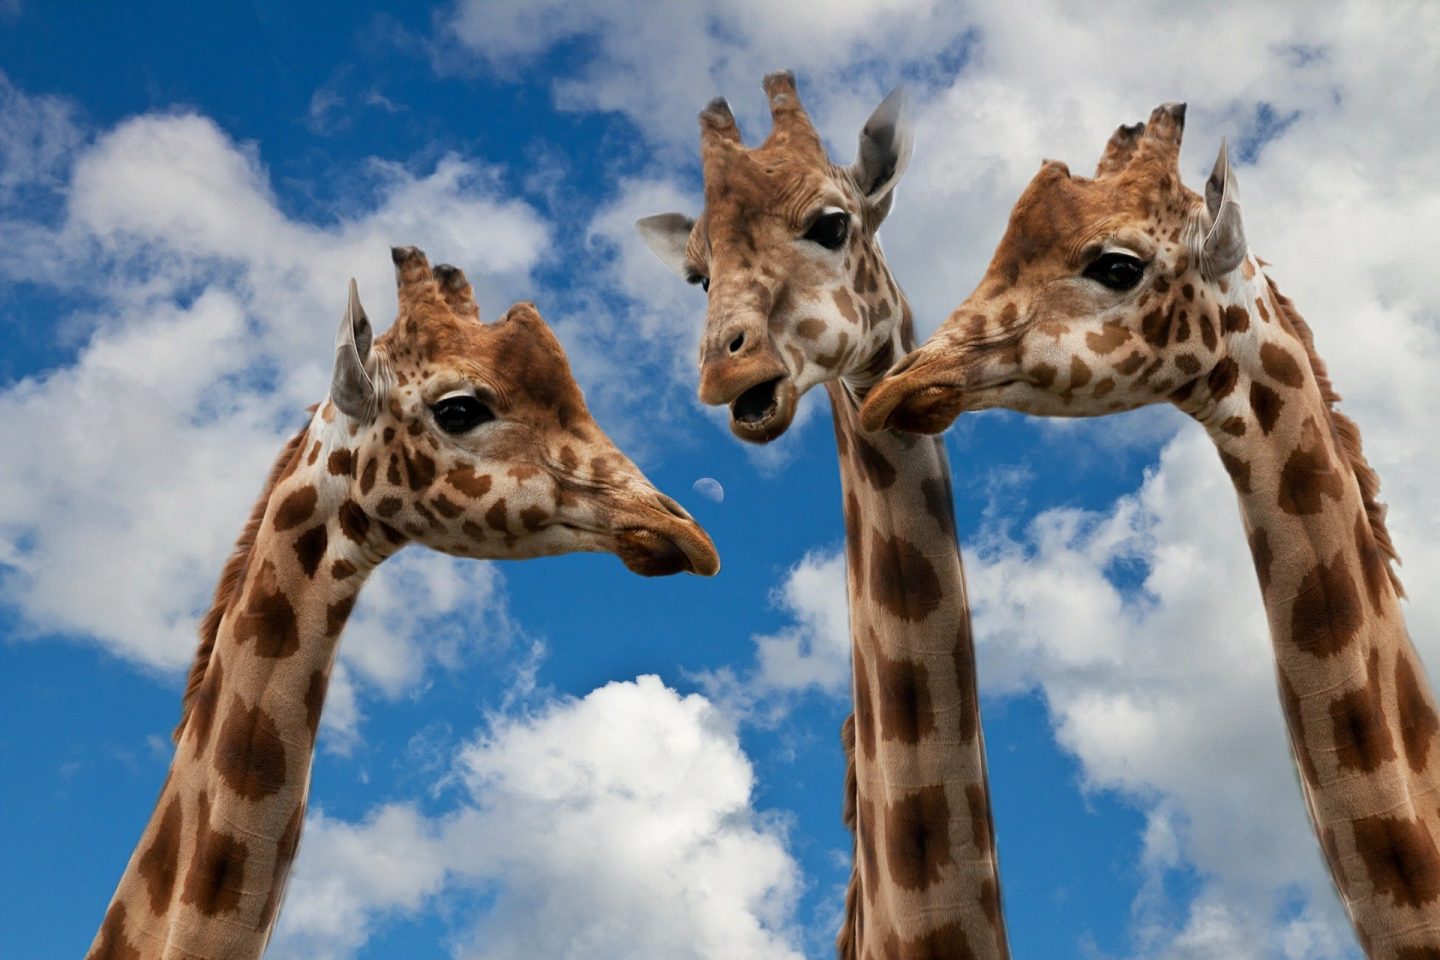 Feedback of the giraffes